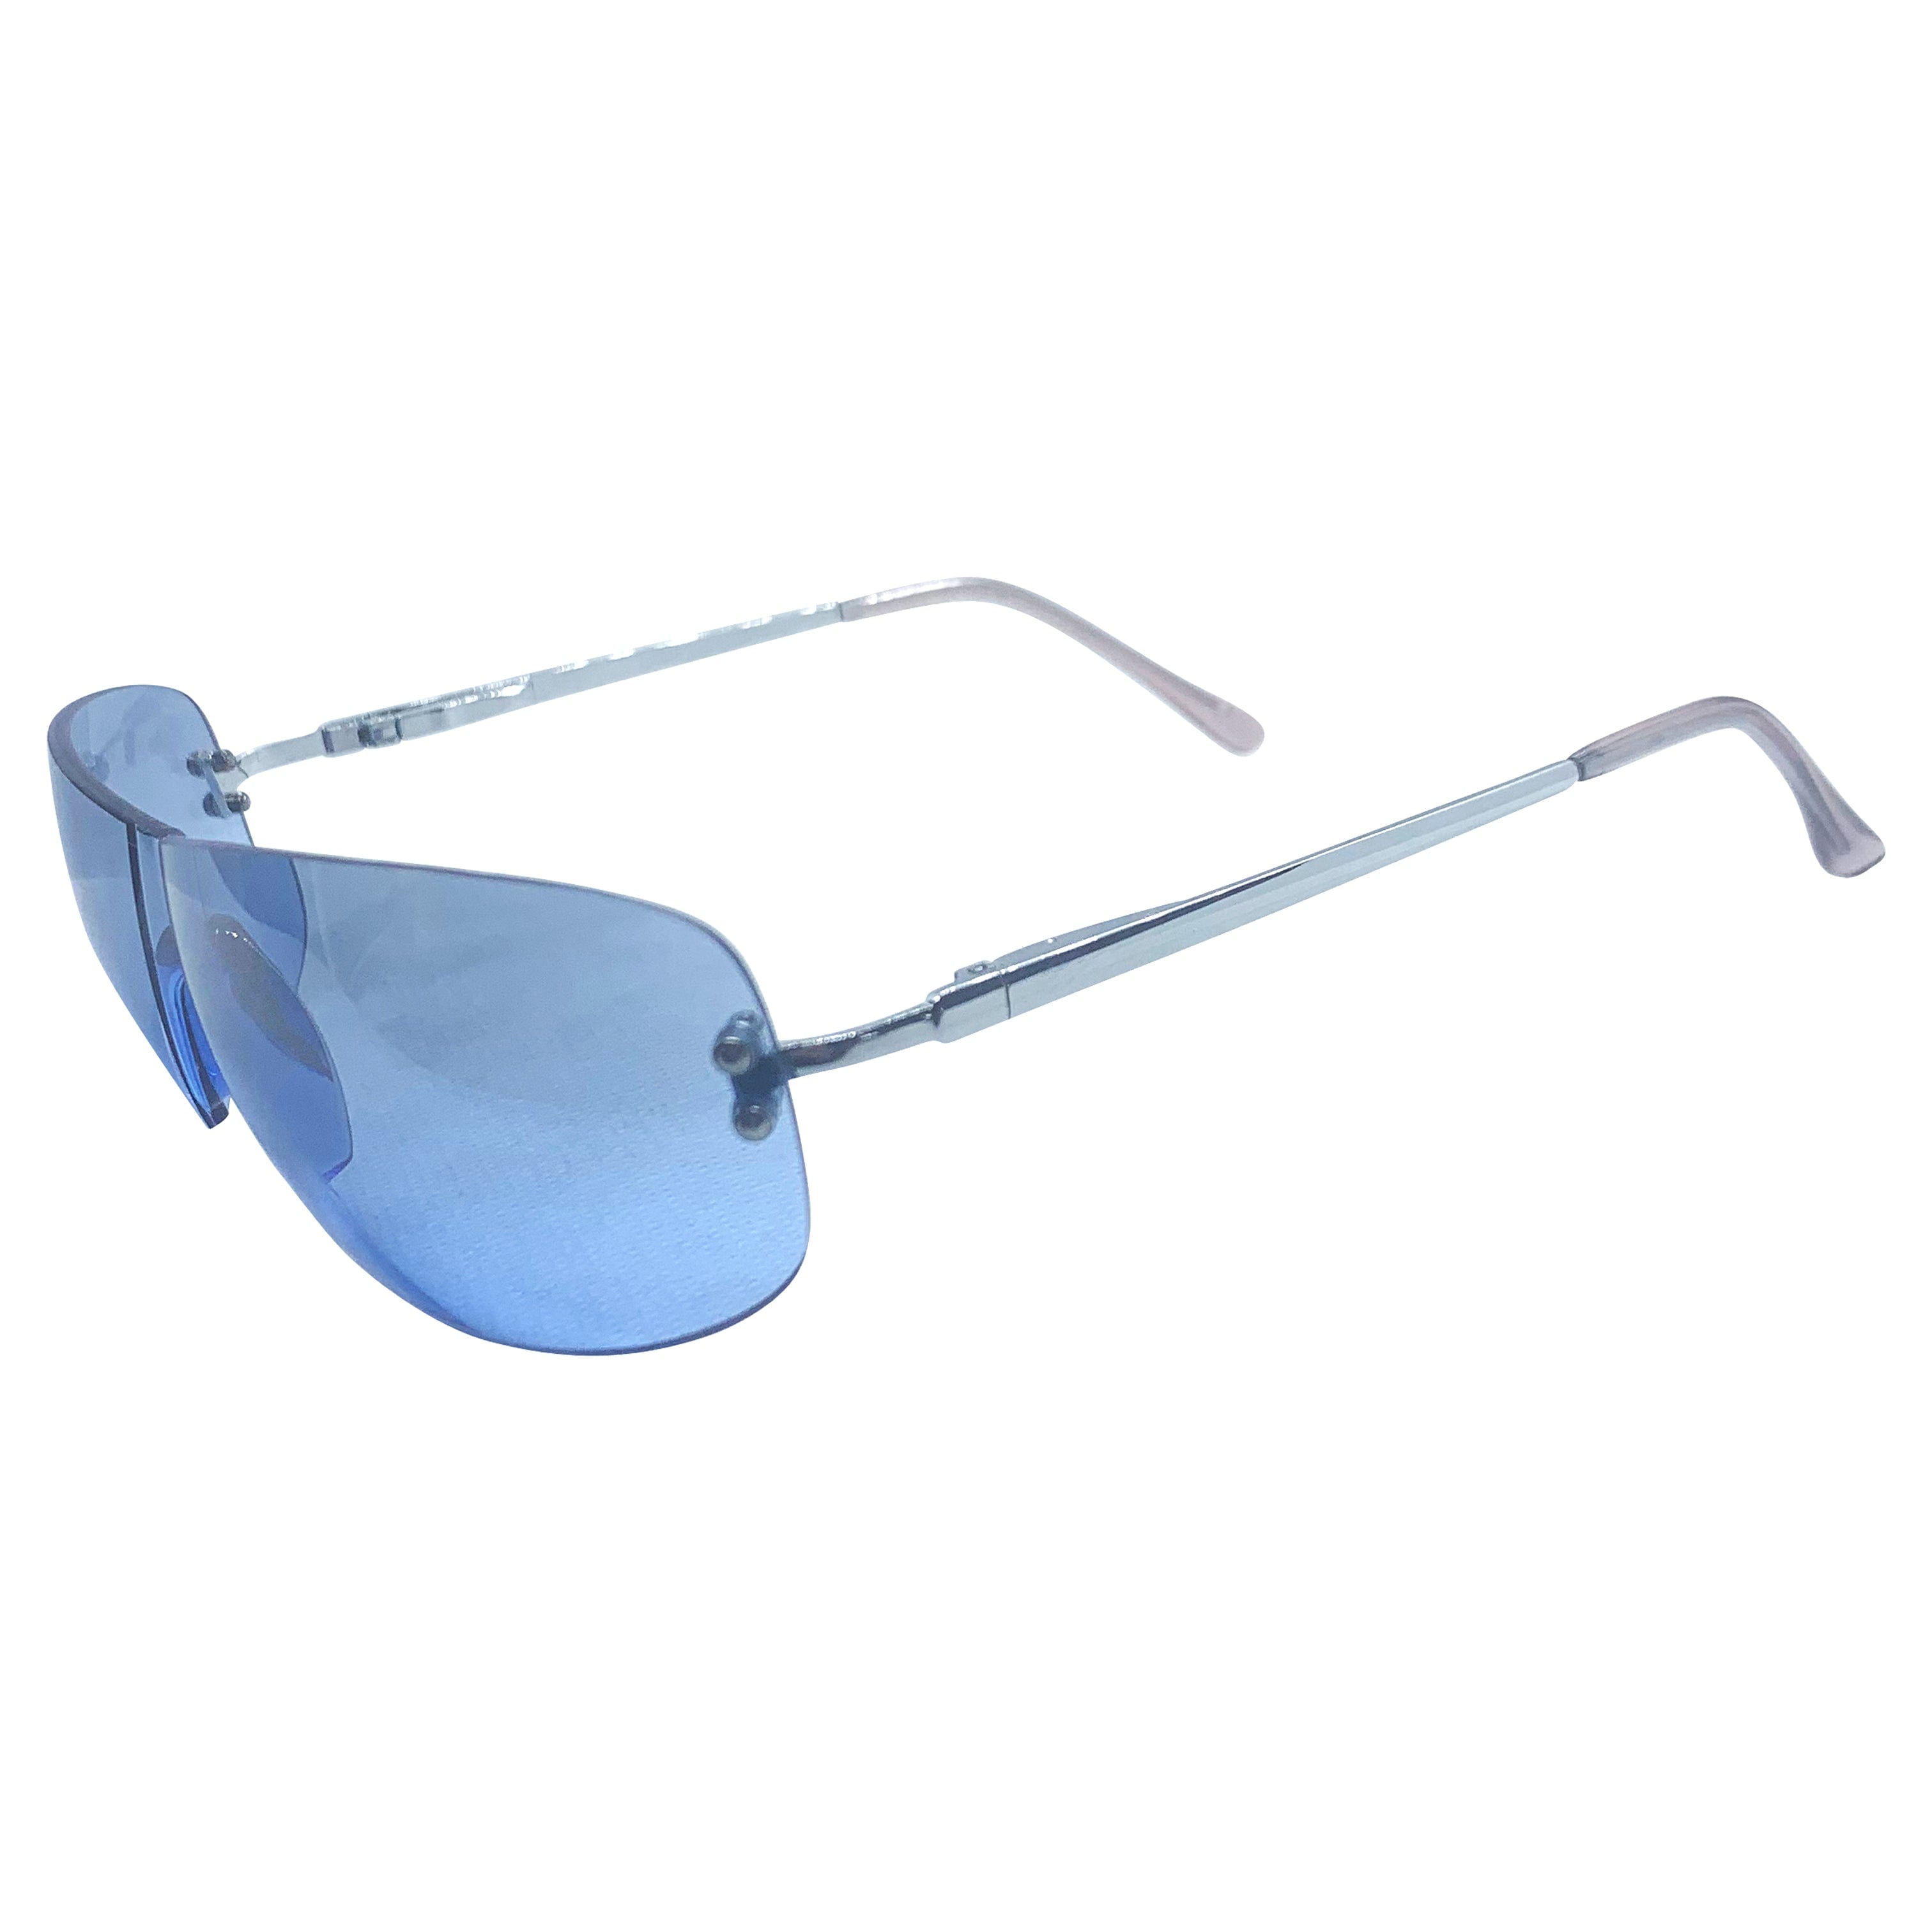 BOWIE Blue Rimless Fashion Sunglasses